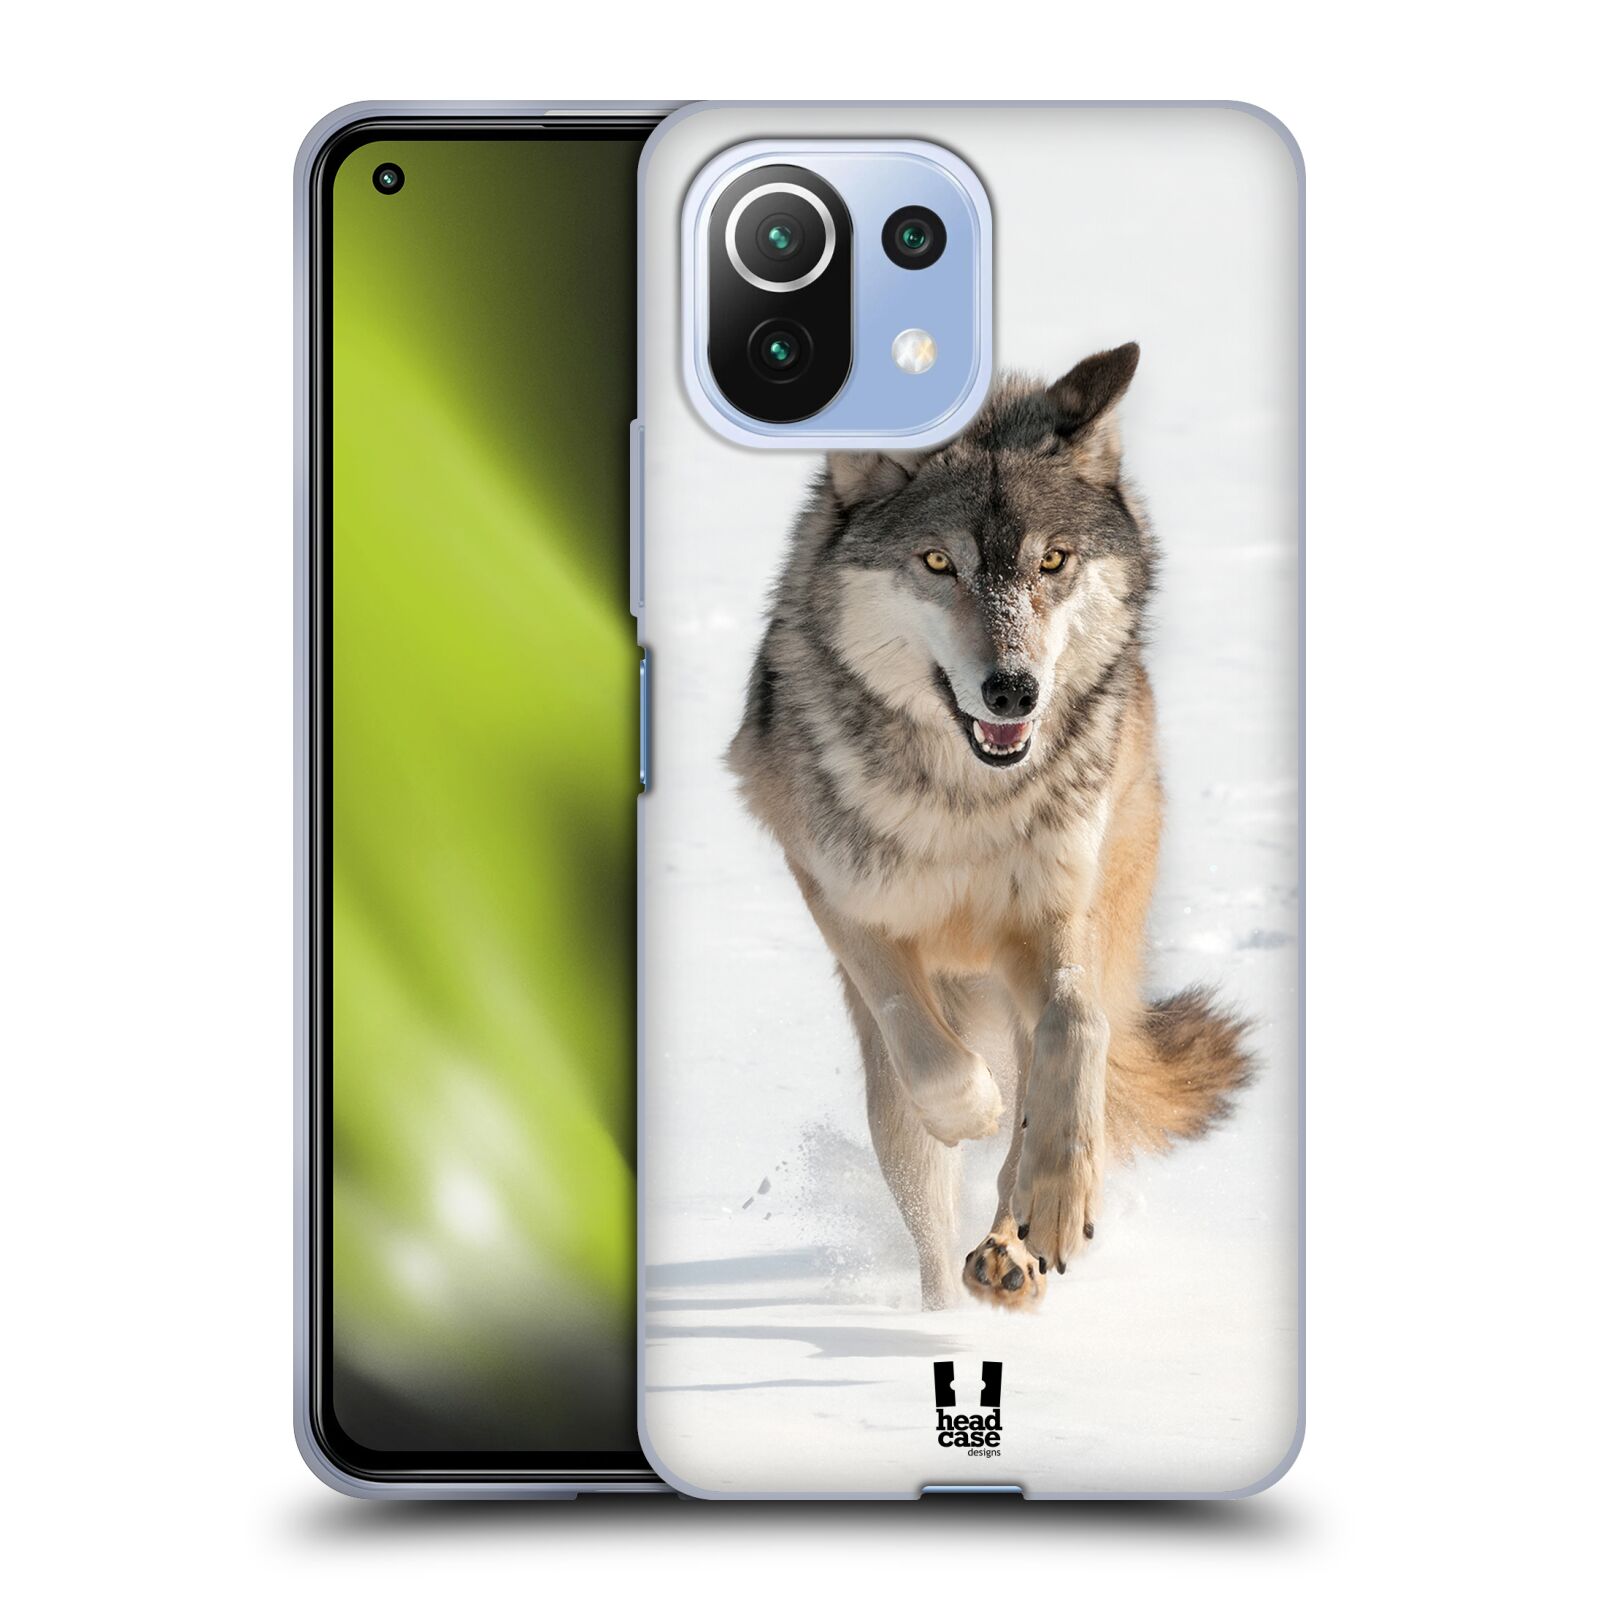 Plastový obal HEAD CASE na mobil Xiaomi Mi 11 LITE vzor Divočina, Divoký život a zvířata foto BĚŽÍCÍ VLK